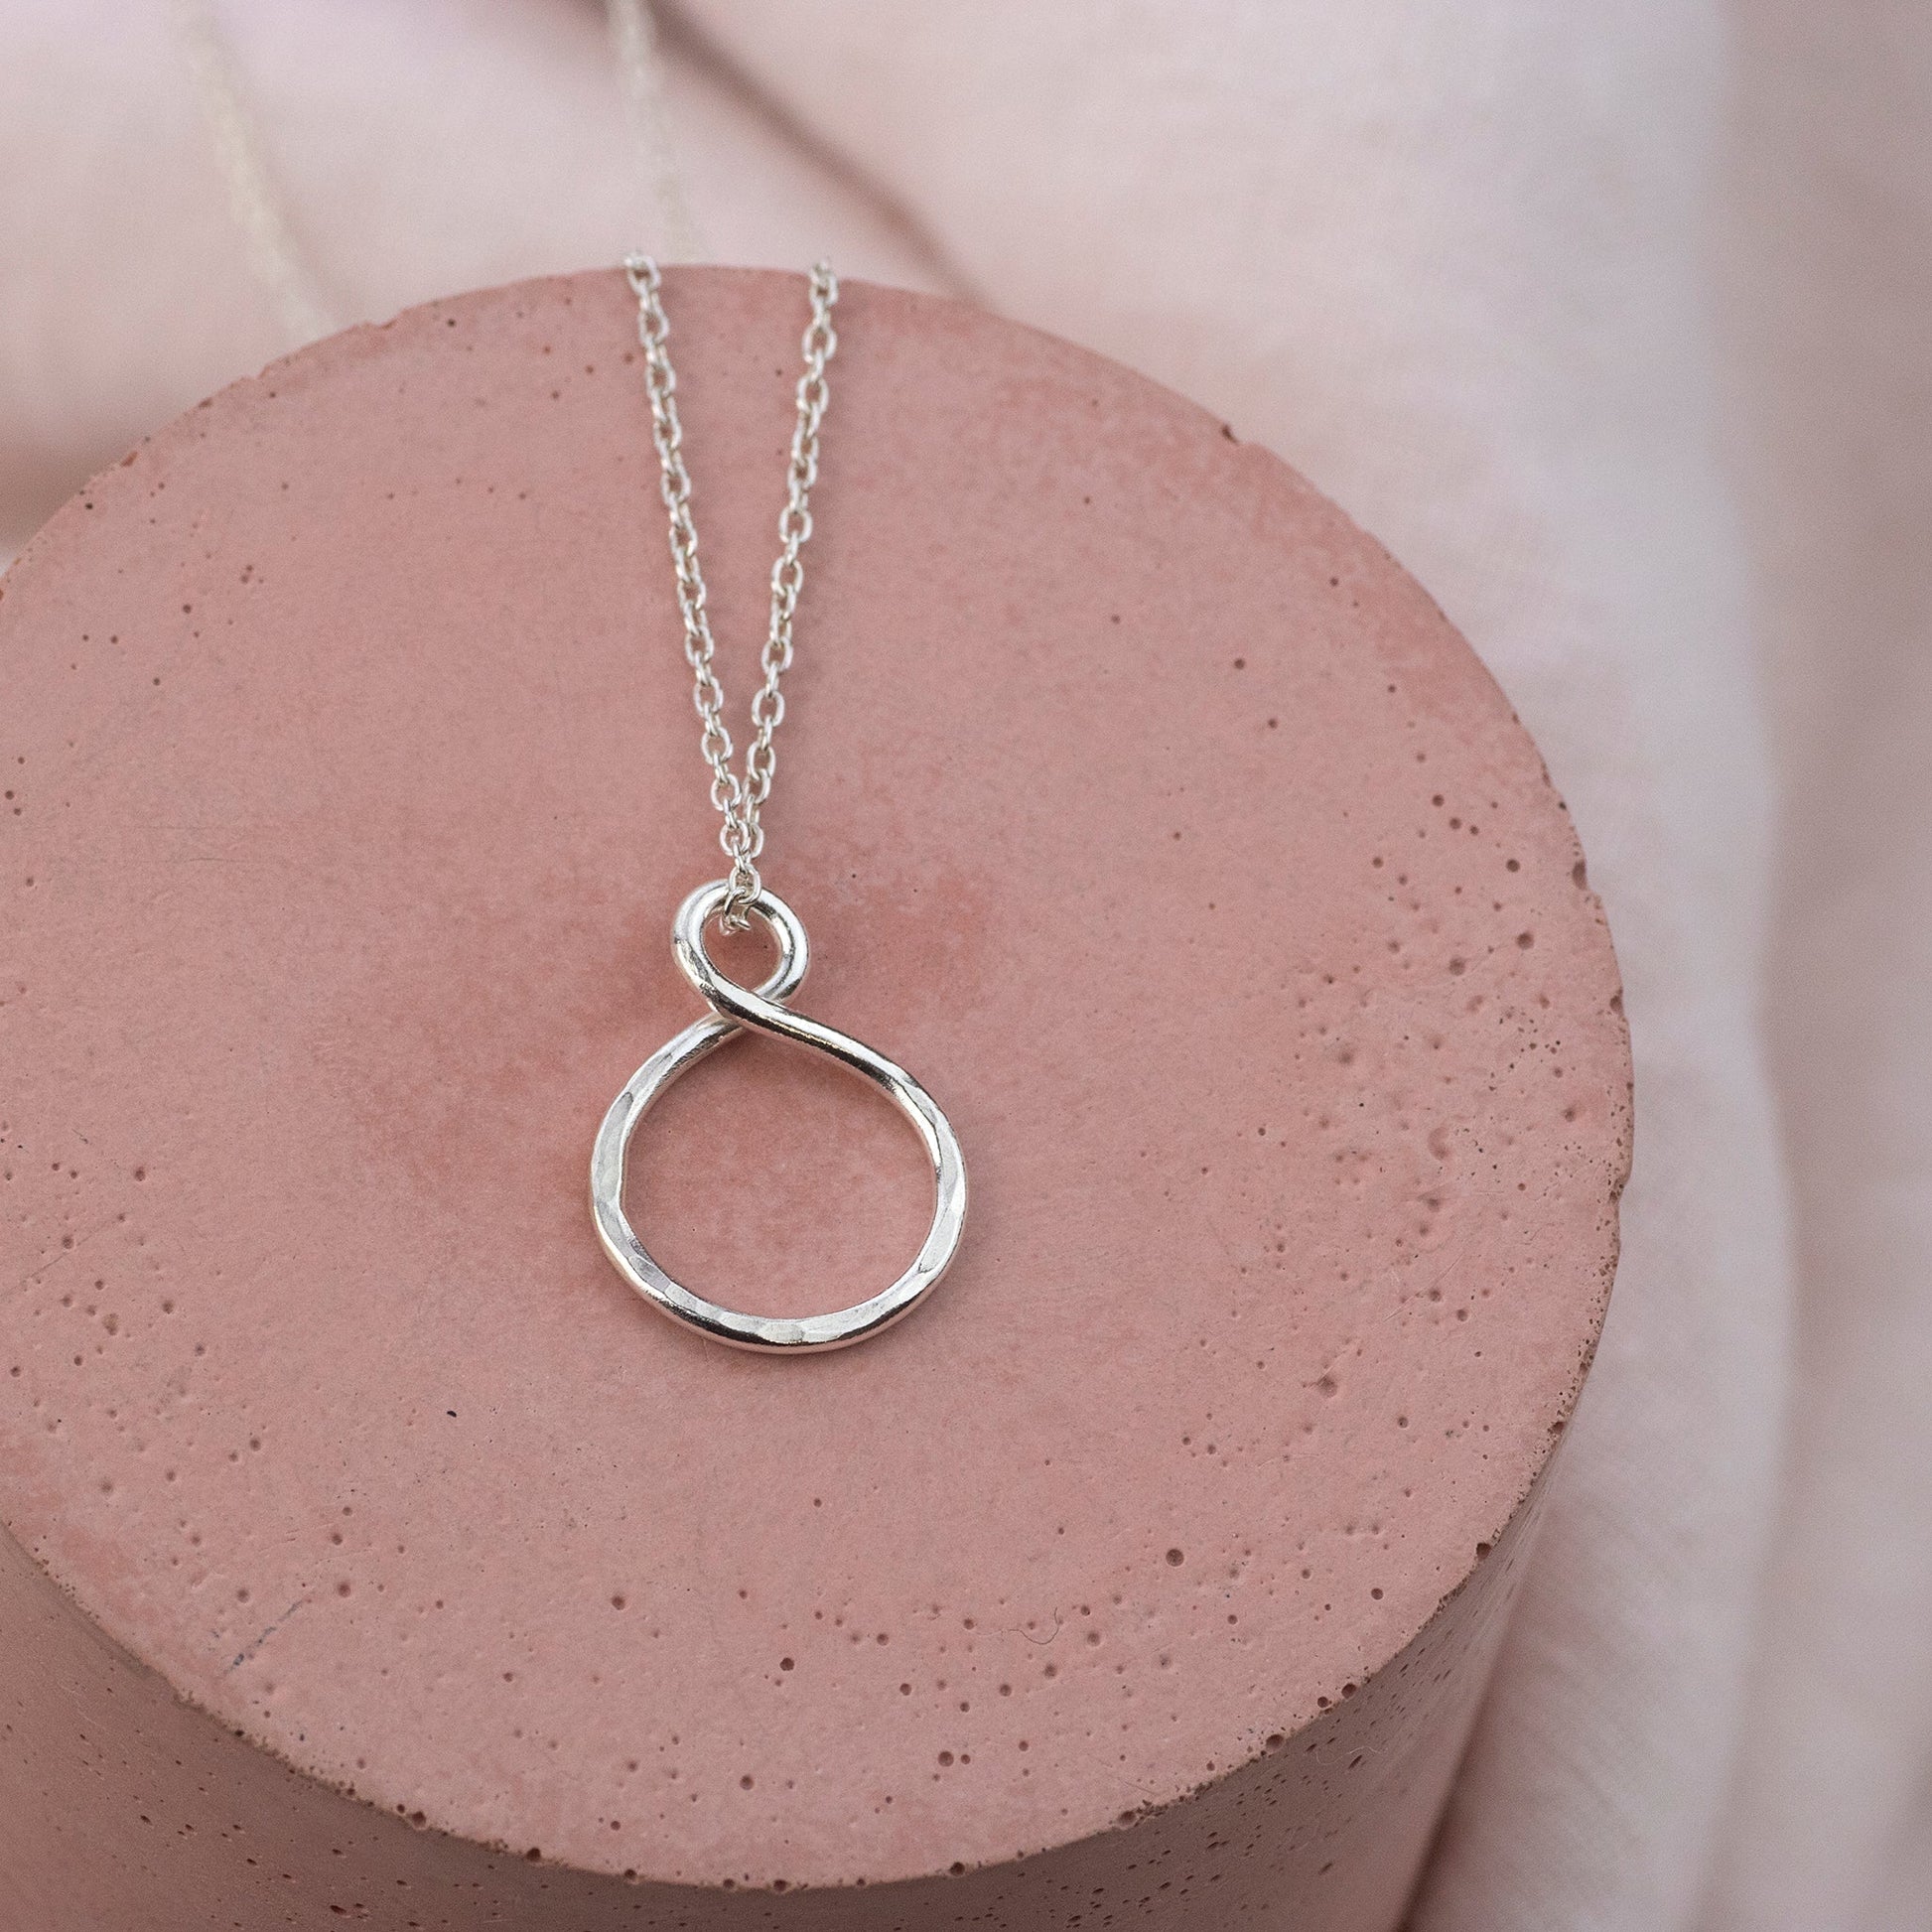 Quinceañera Gift - Petite Infinity Necklace - Silver